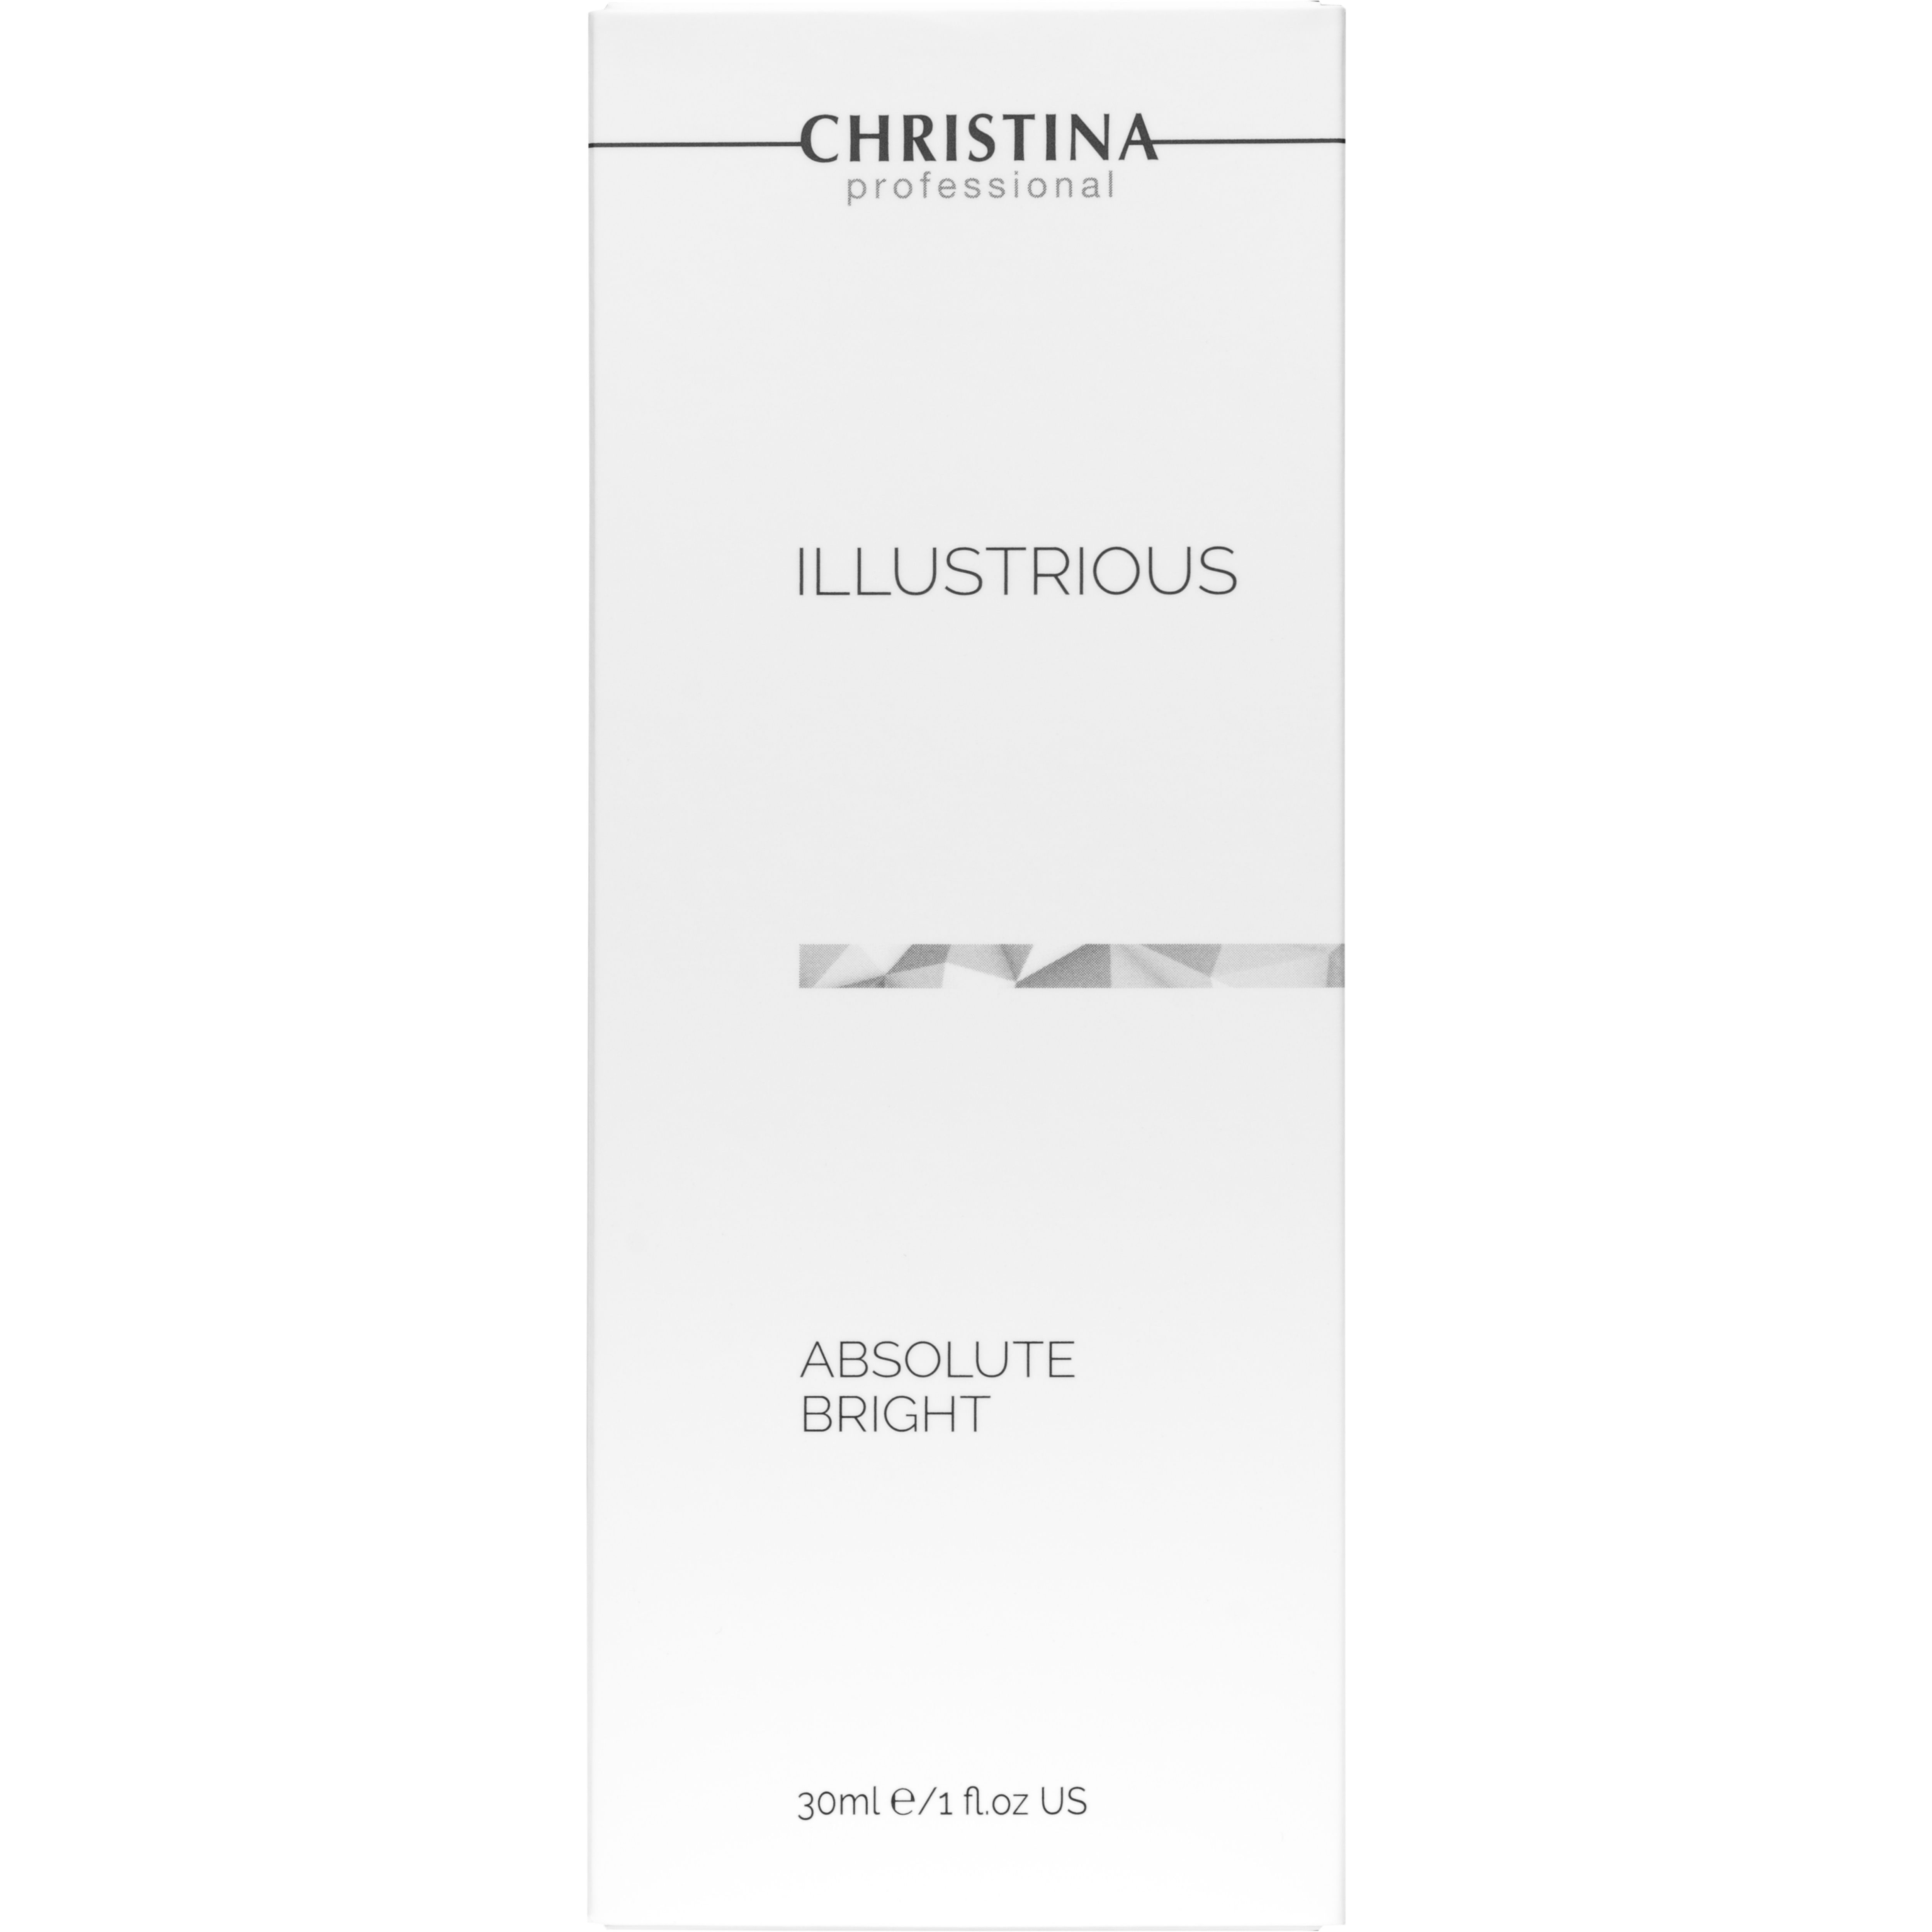 Сыворотка для лица осветляющая Christina Illustrious Absolute Bright 30 мл - фото 2